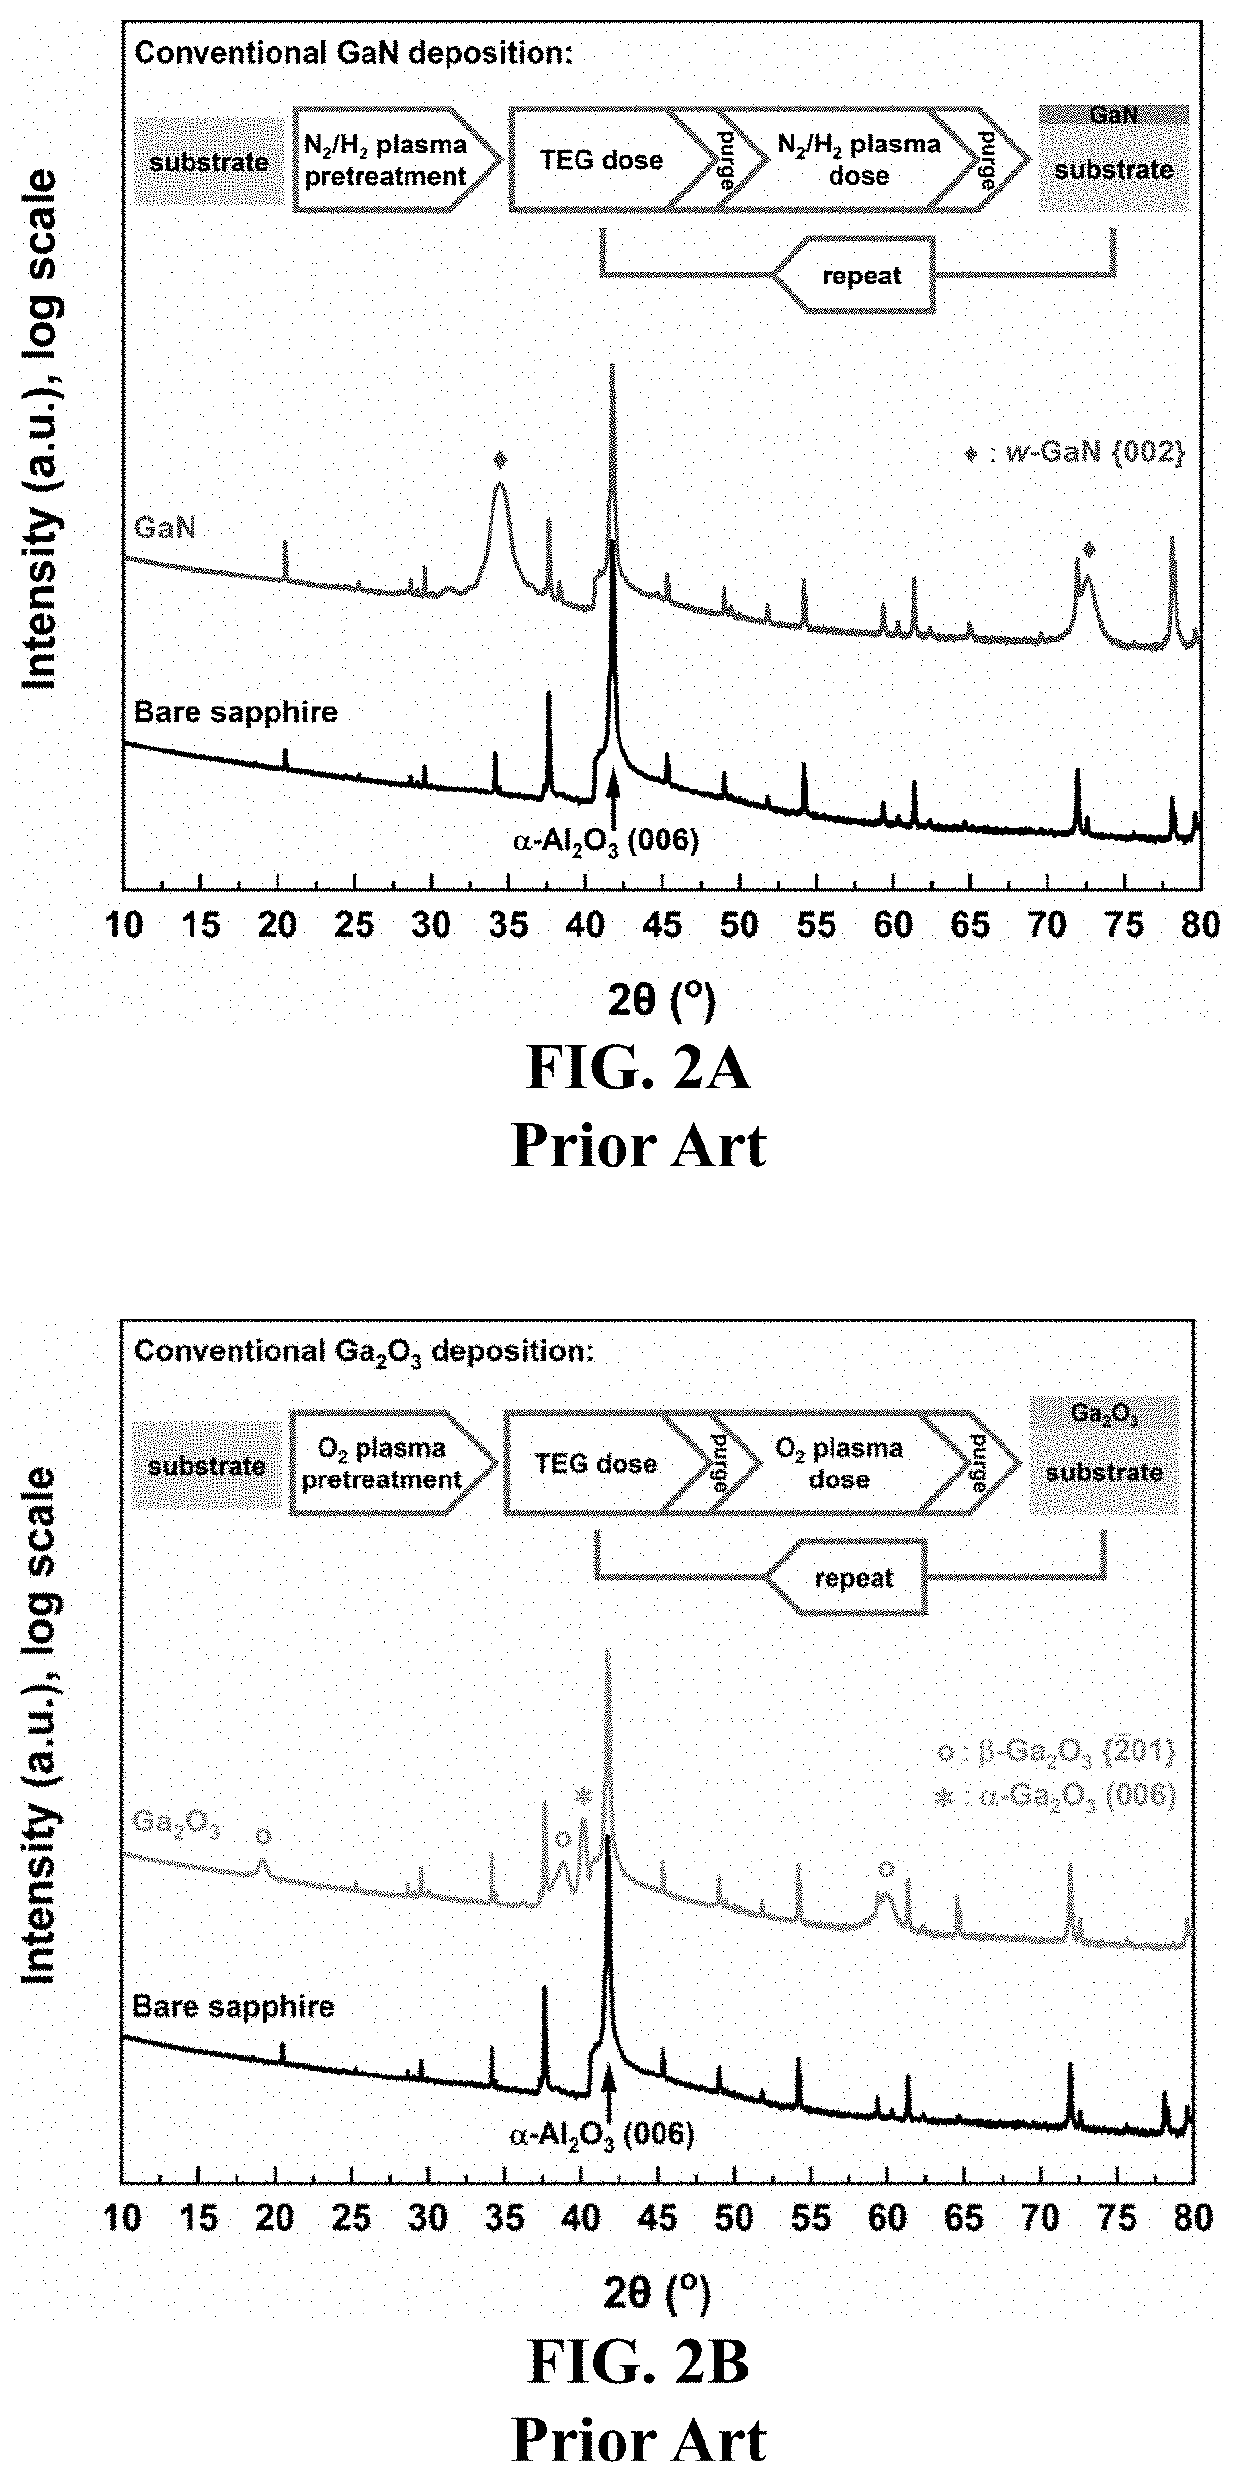 Deposition of alpha-gallium oxide thin films